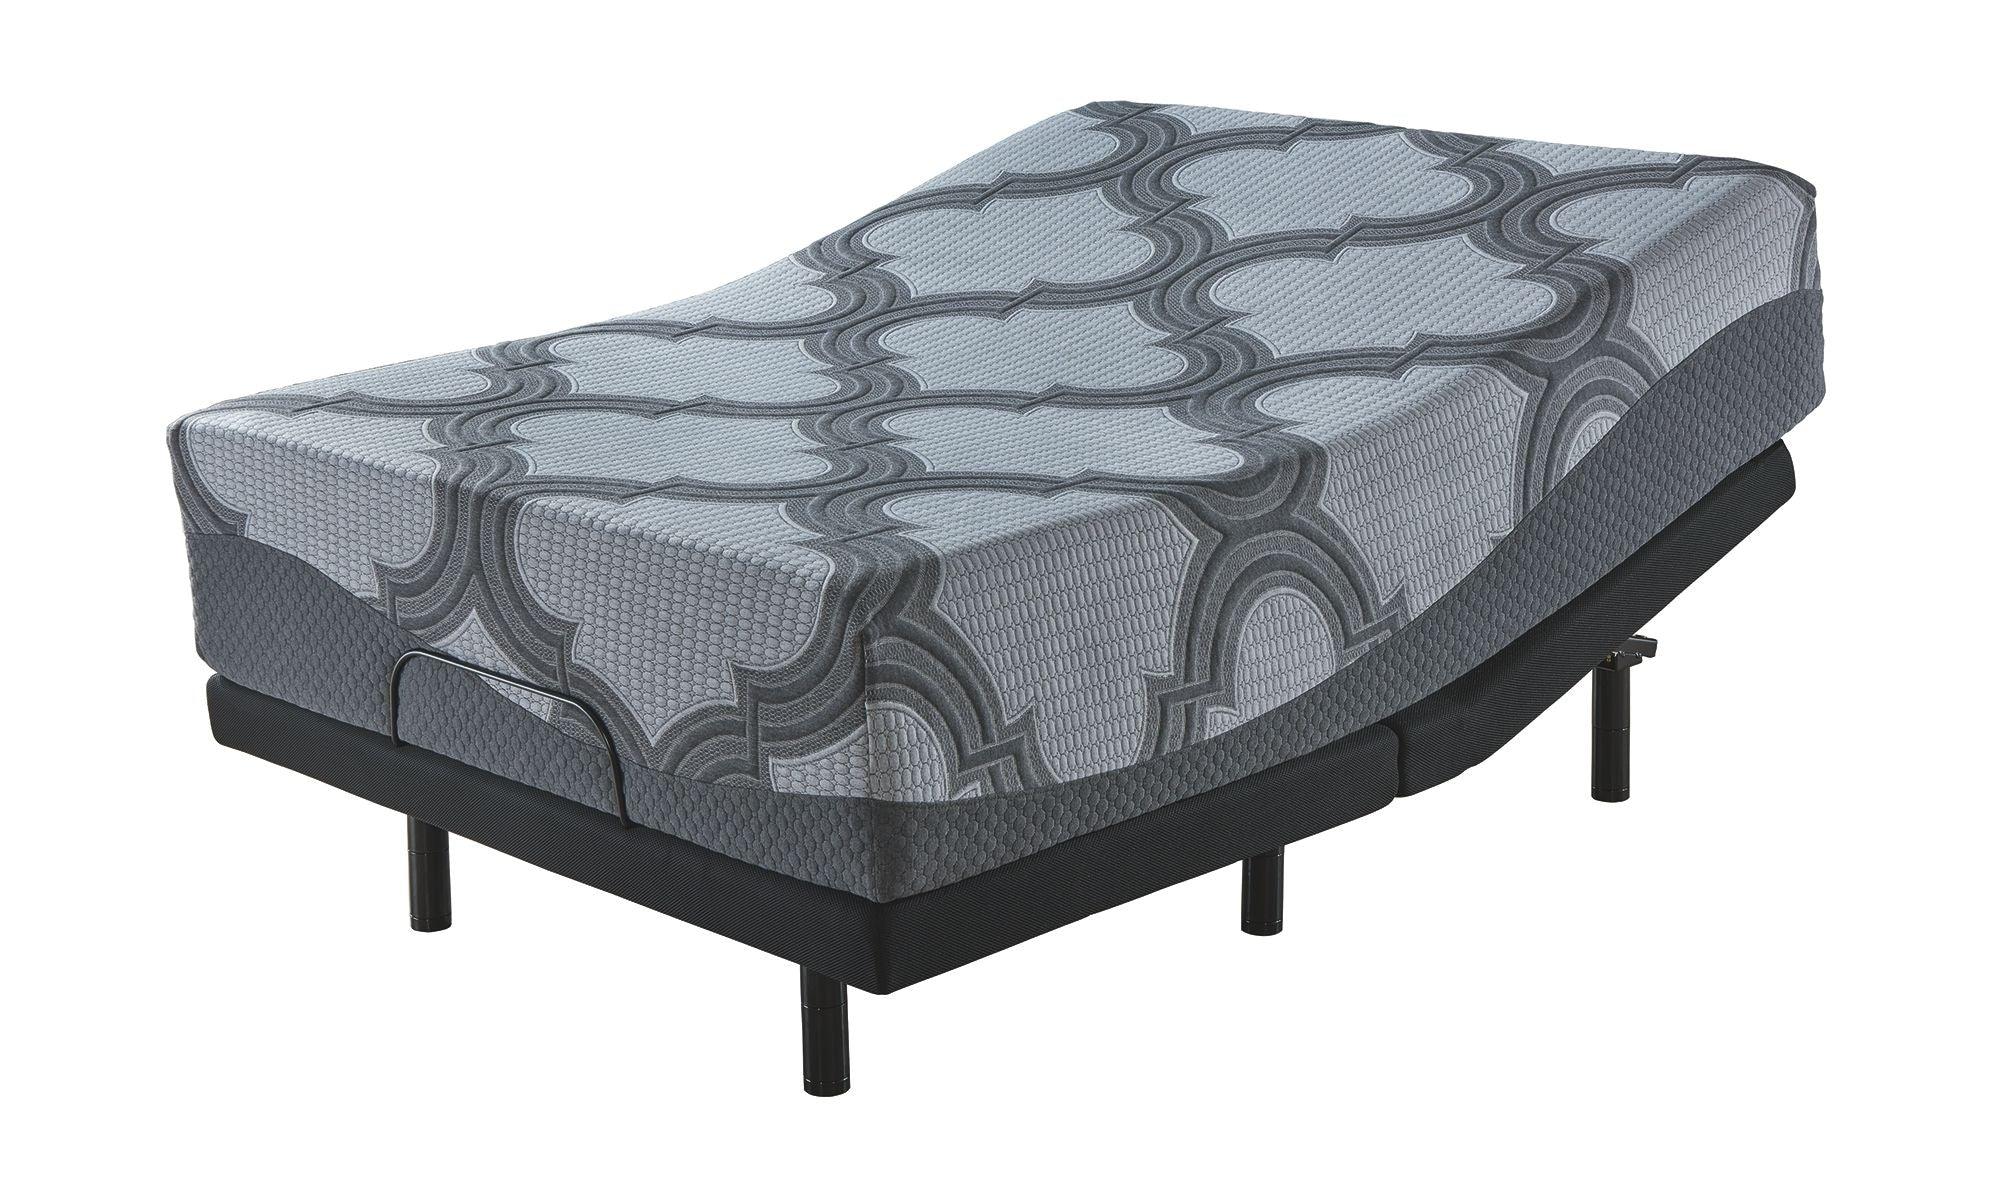 Ashley Sleep® - Ashley Sleep 1400 Hybrid Mattress With Adjustable Base - 5th Avenue Furniture